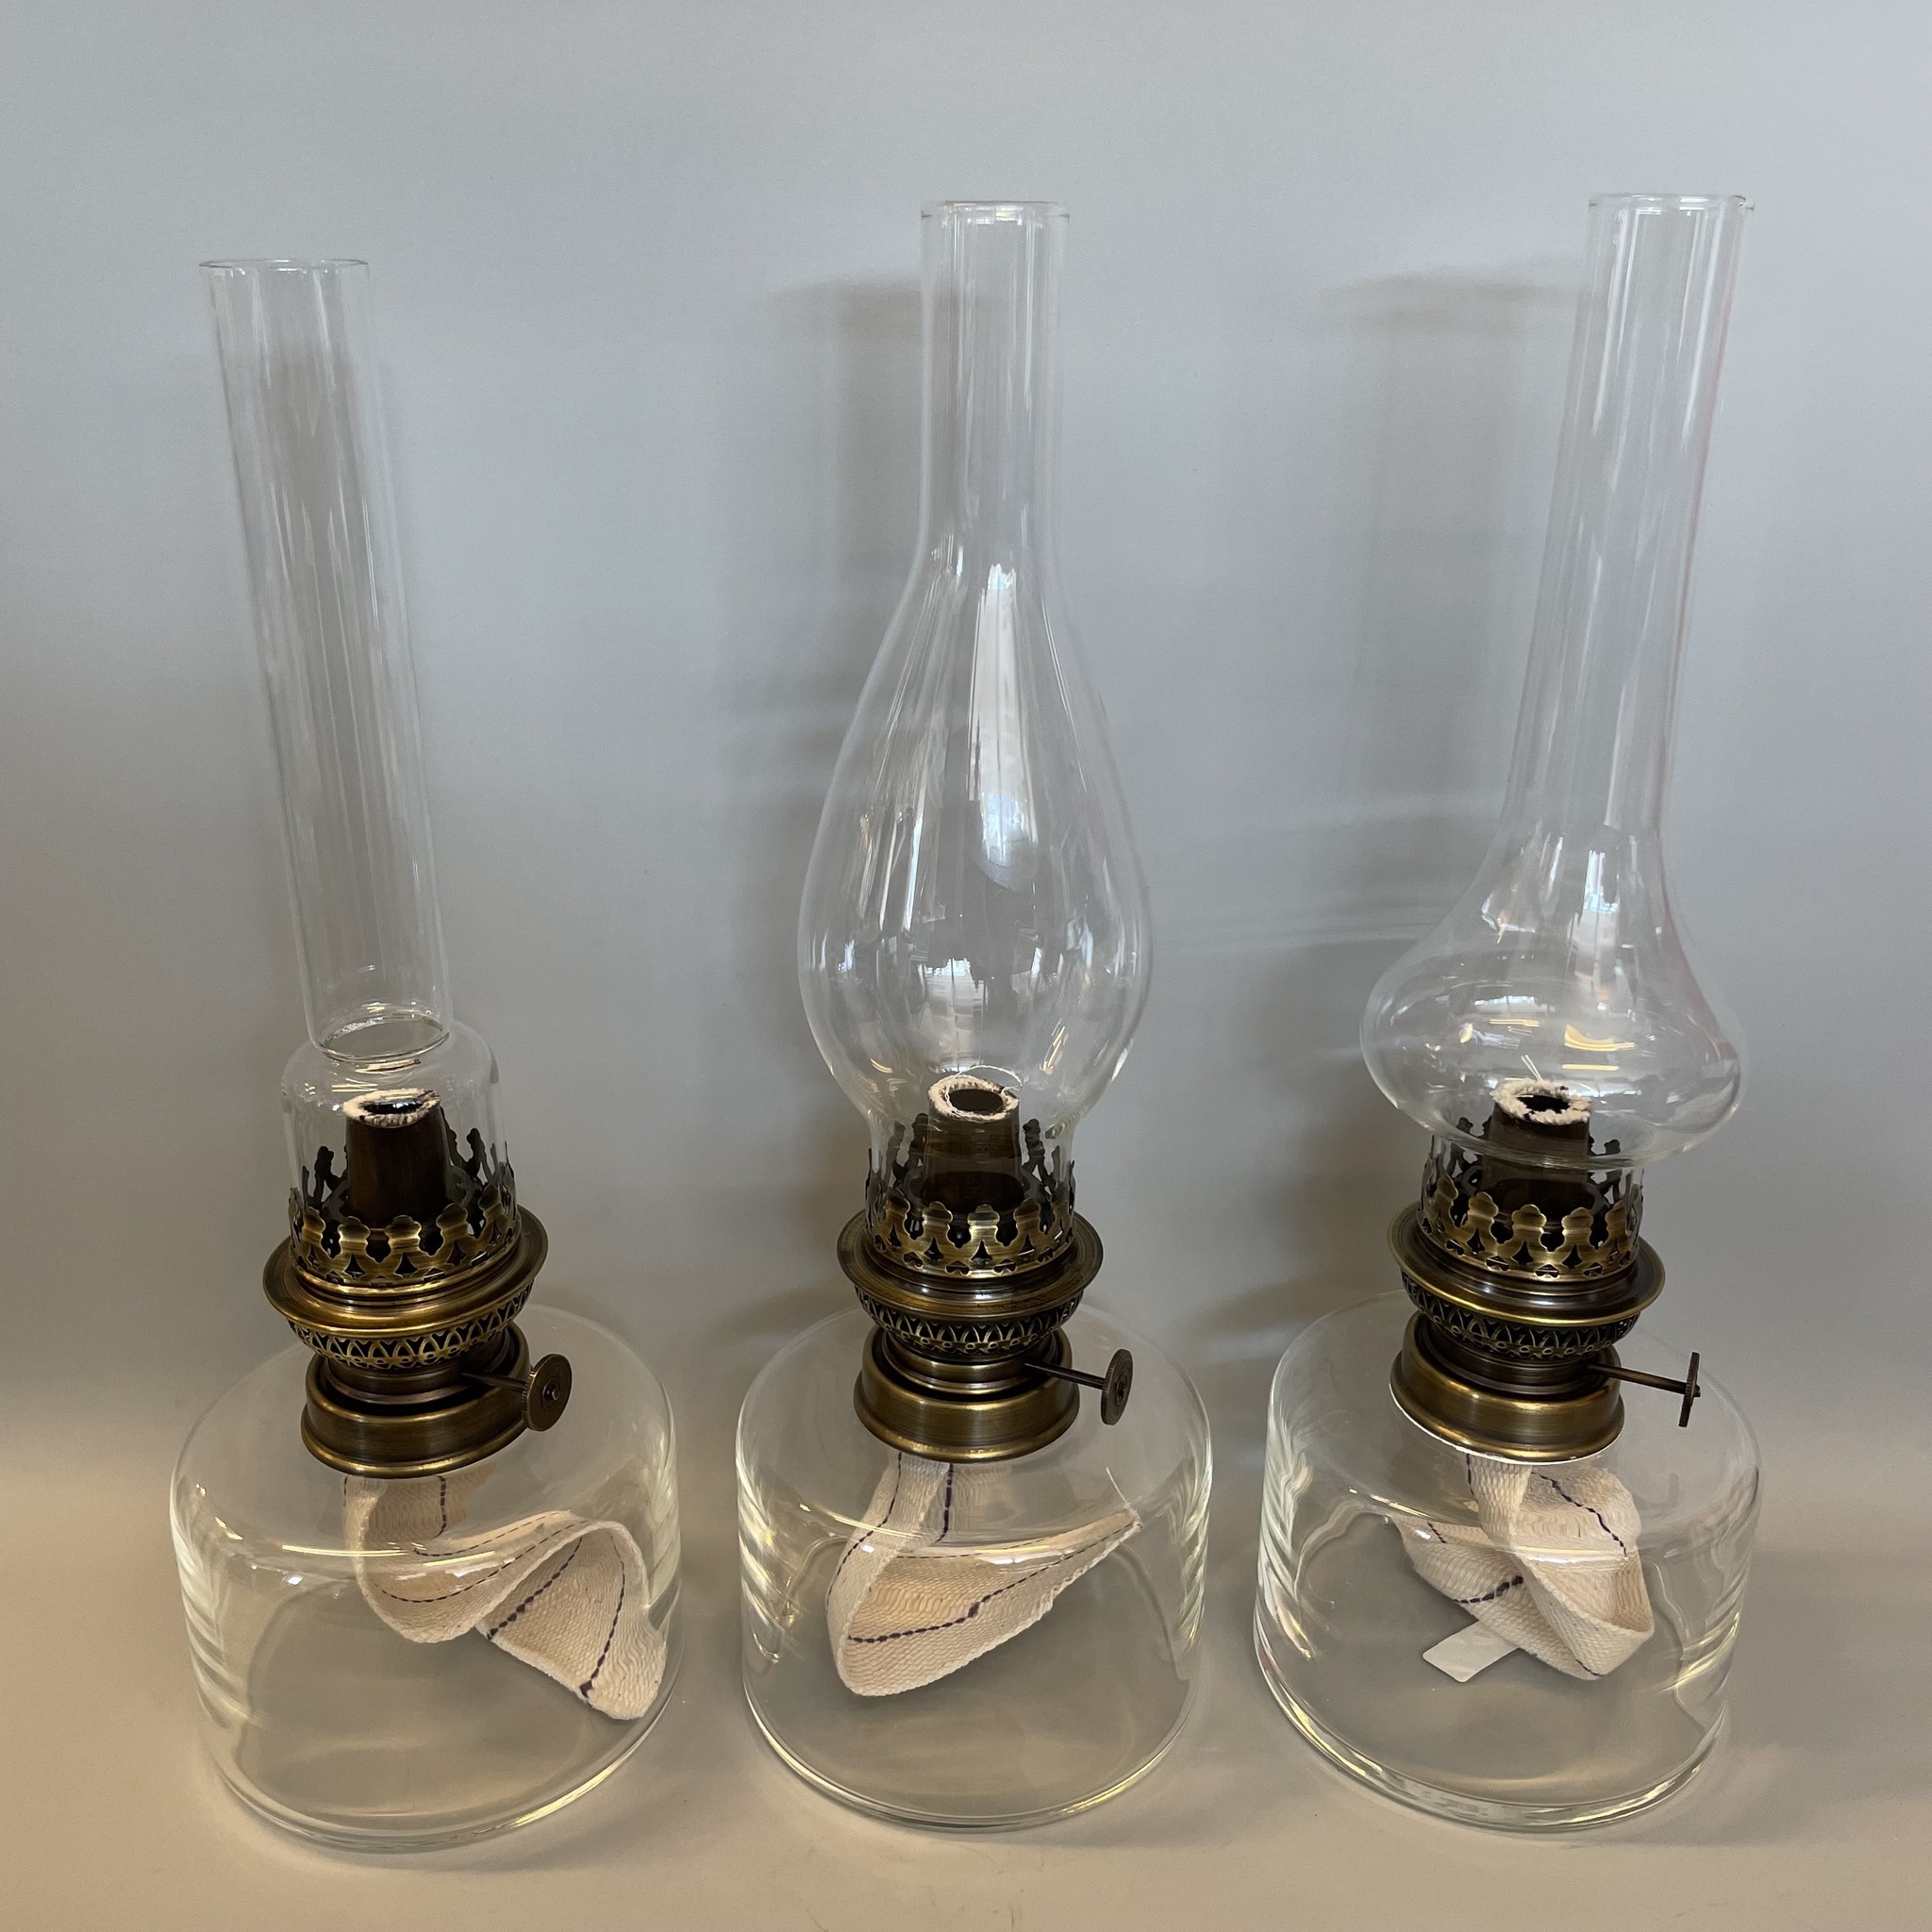 Österlenlampan glasklar/patinerad - Lysande Sekler